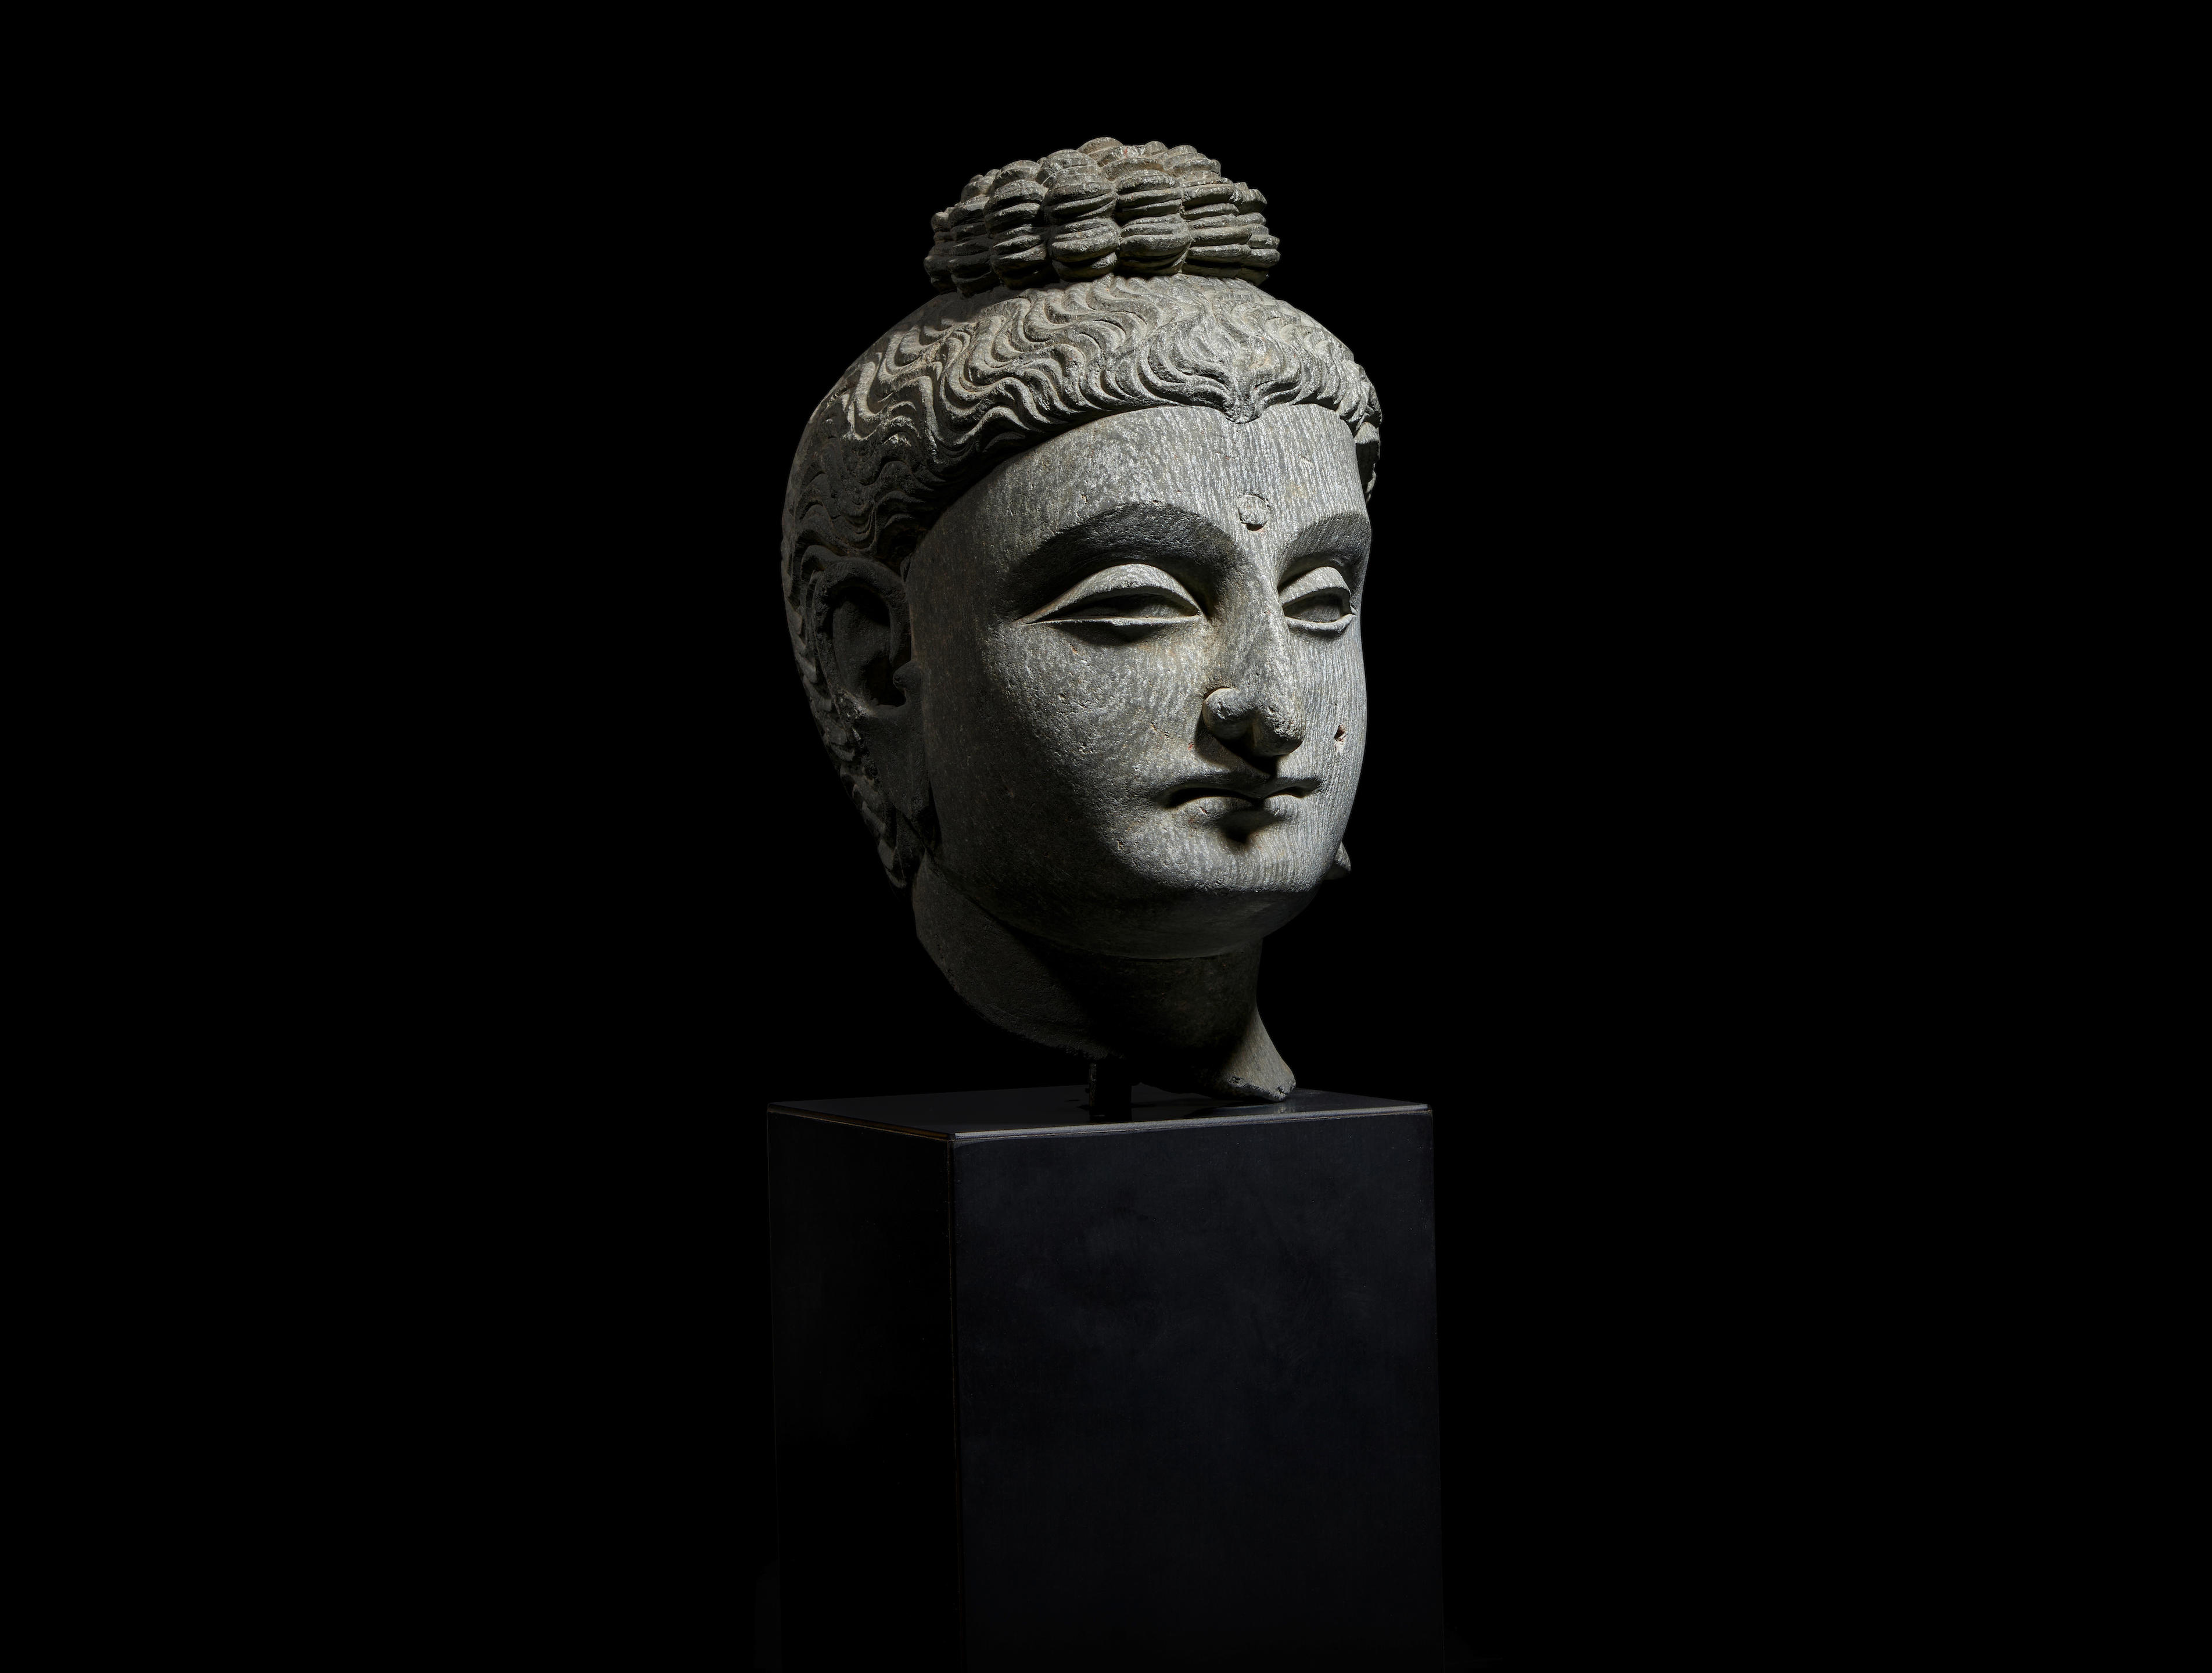 A SCHIST HEAD OF BUDDHA ANCIENT REGION OF GANDHARA, 3RD/4TH CENTURY